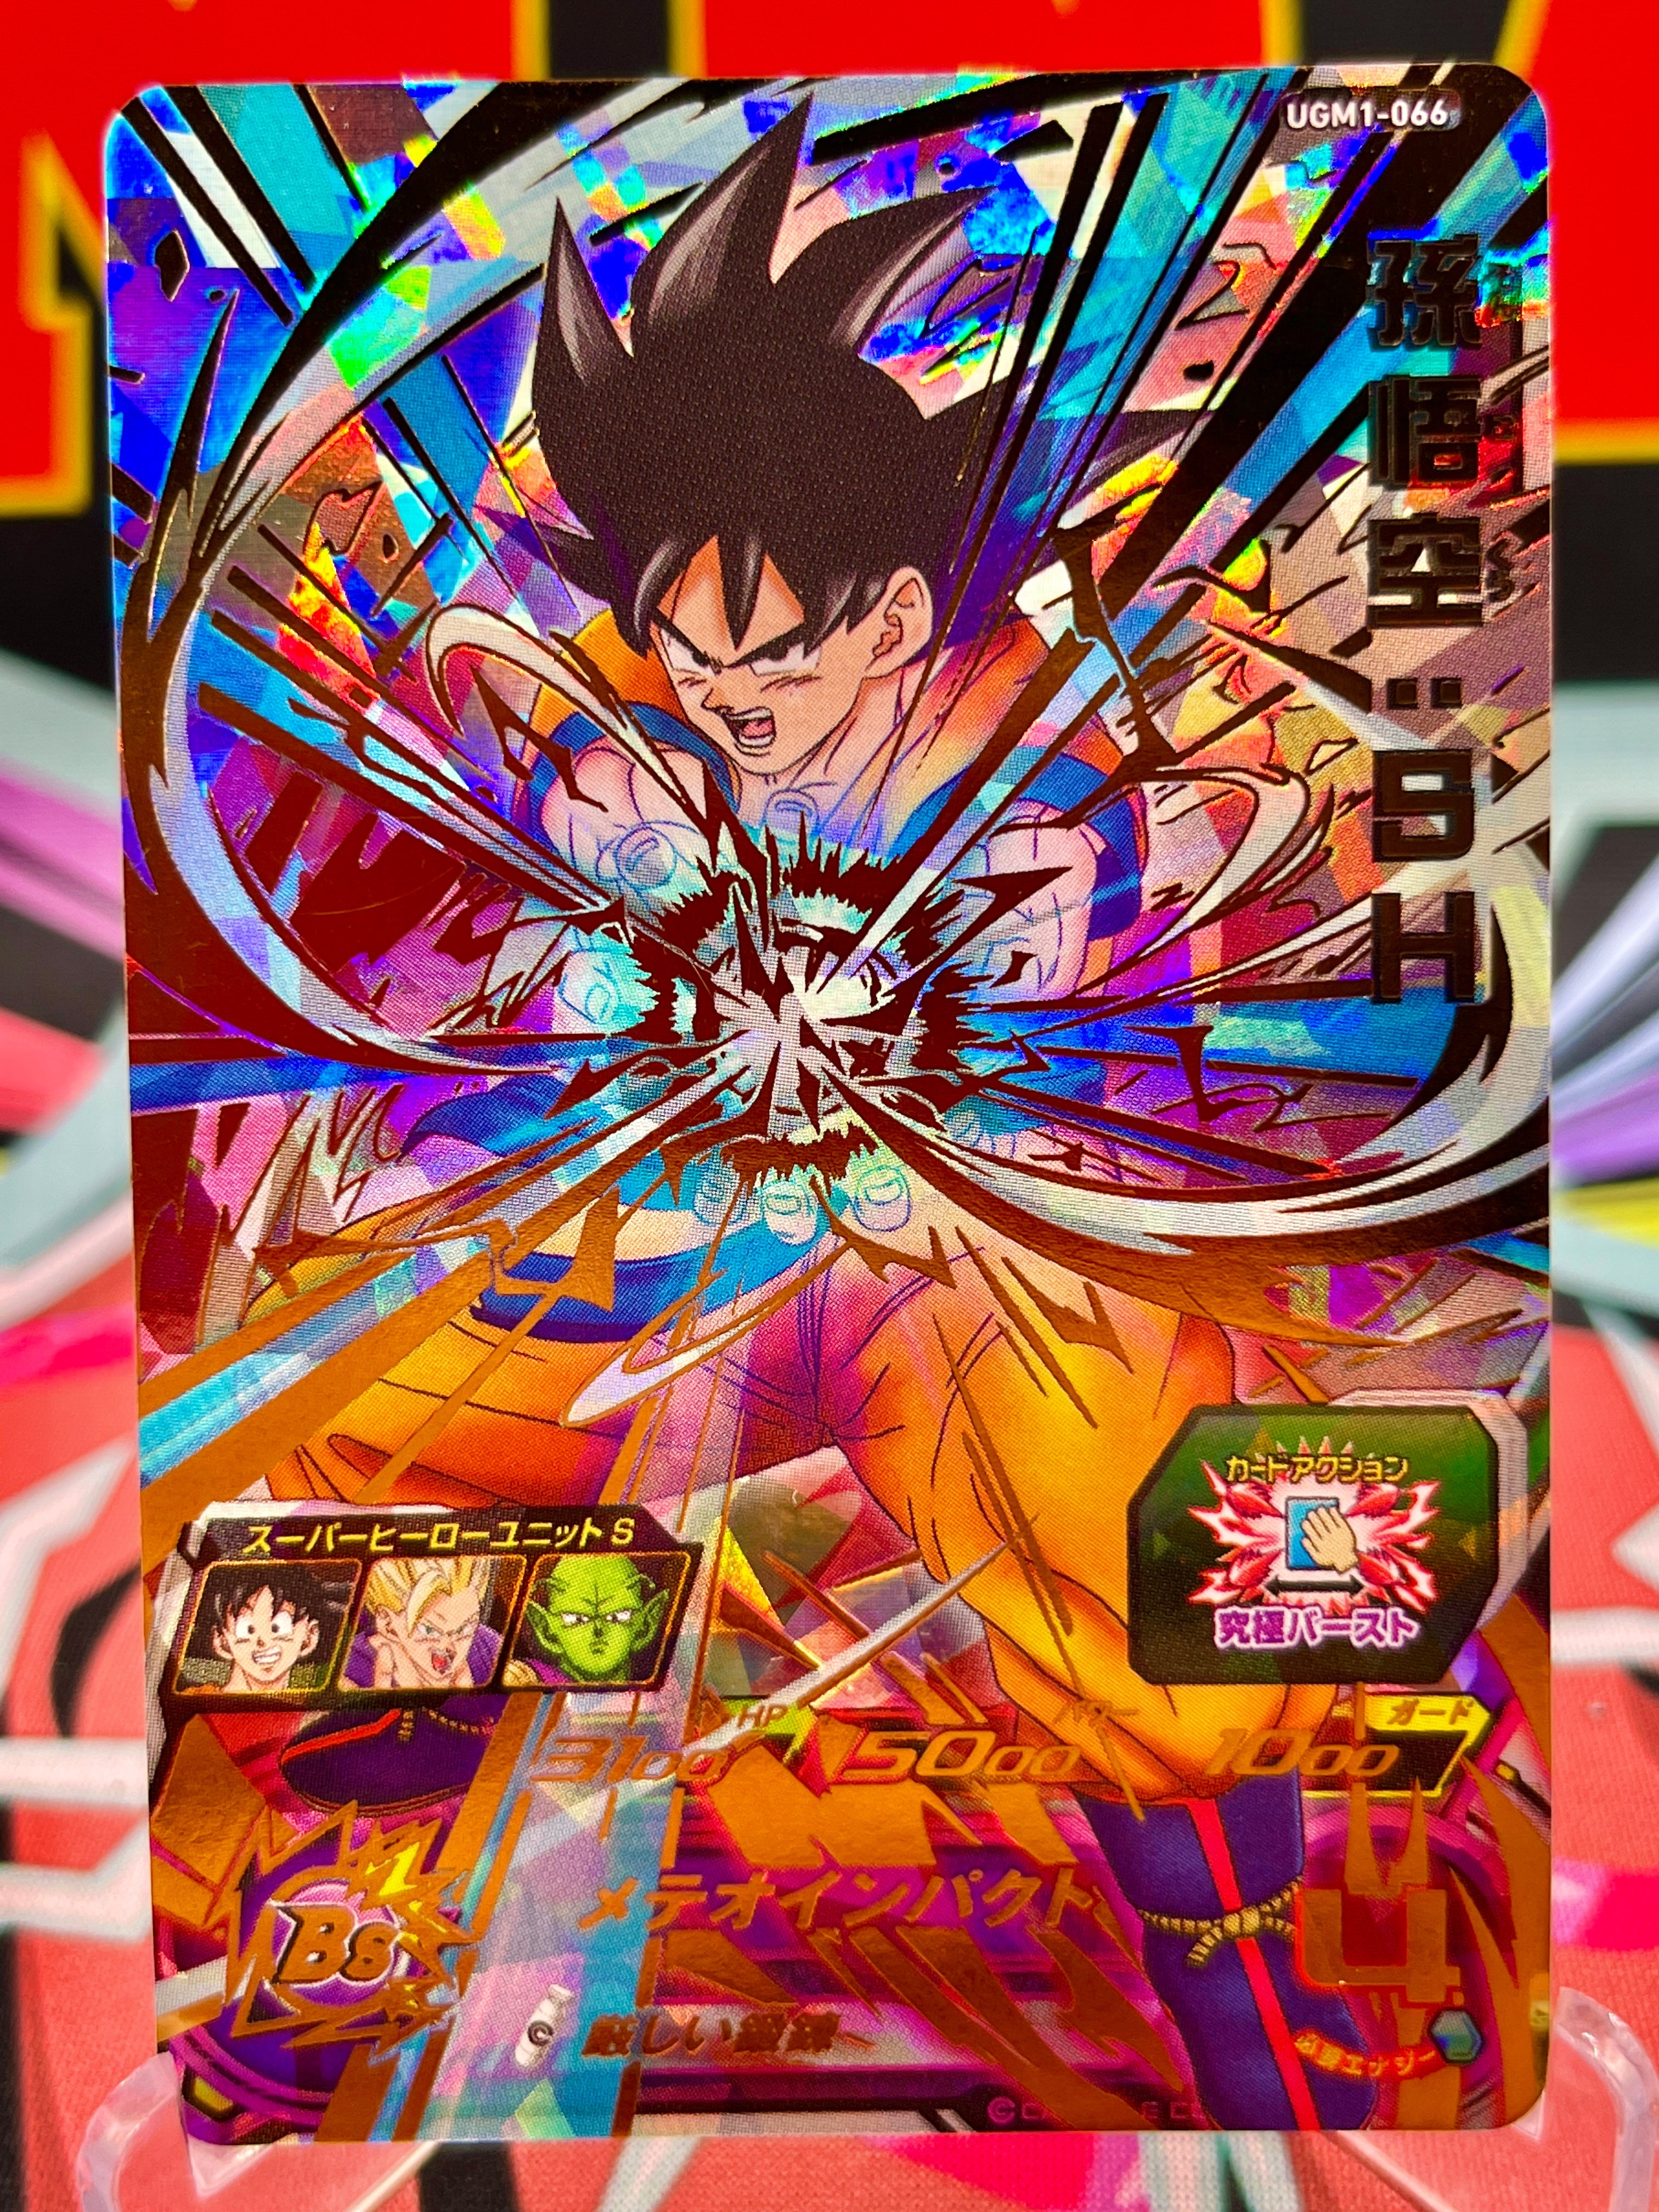 UGM1-066 Son Goku: SH UR (2022)